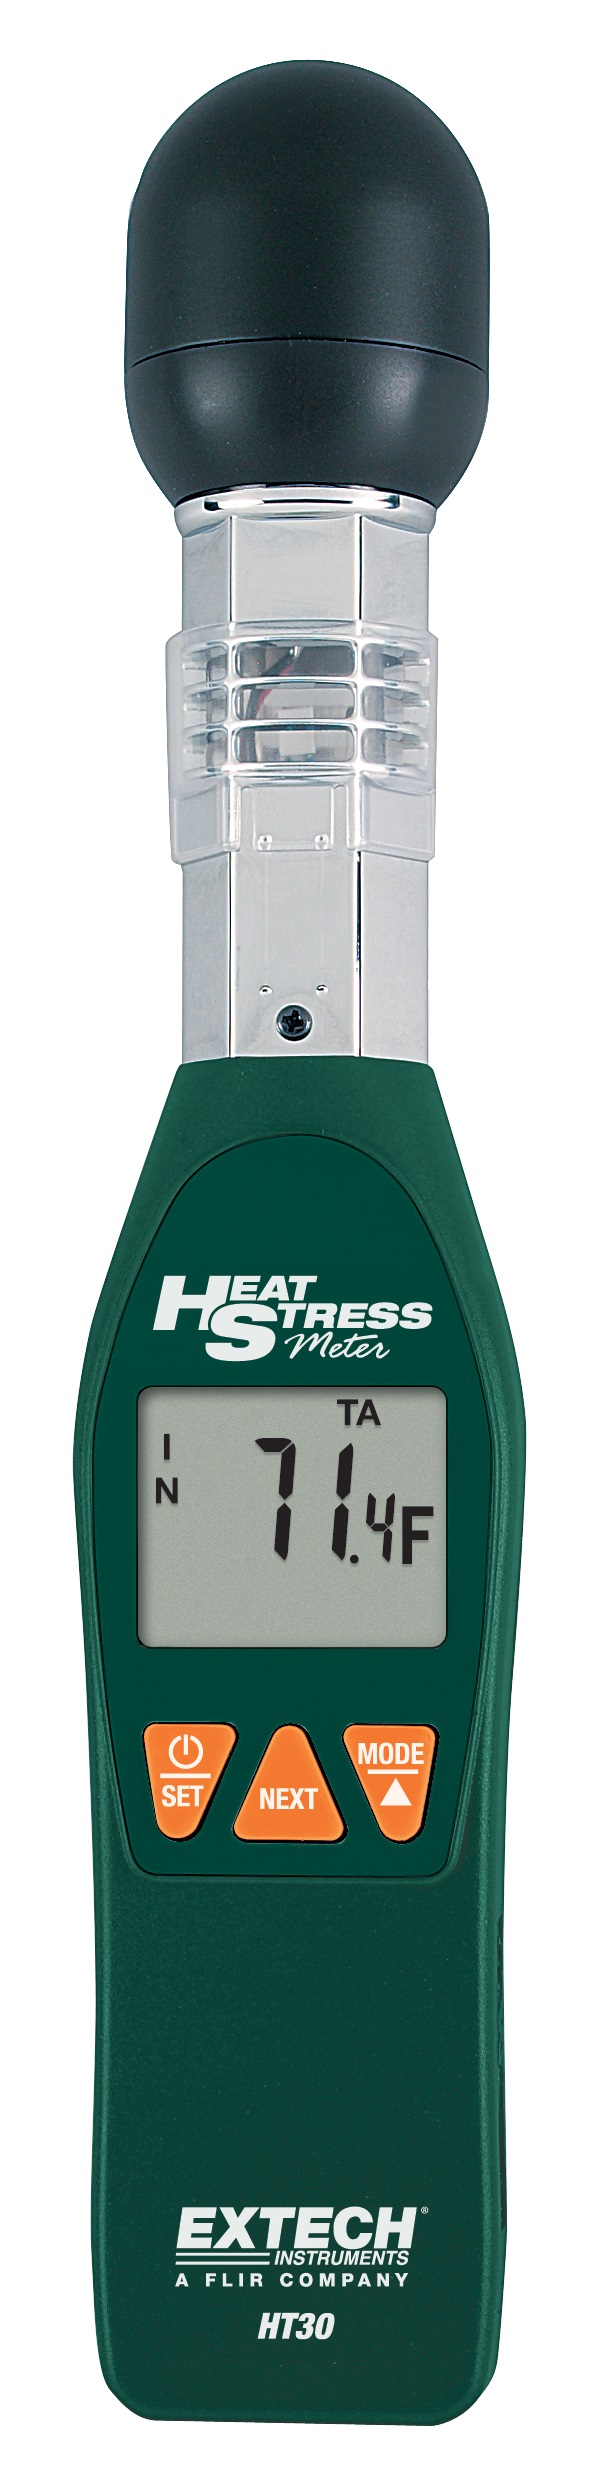 Extech HT30 Heat Stress WBGT (Wet Bulb Globe Temperature) Meter Calright  Instruments